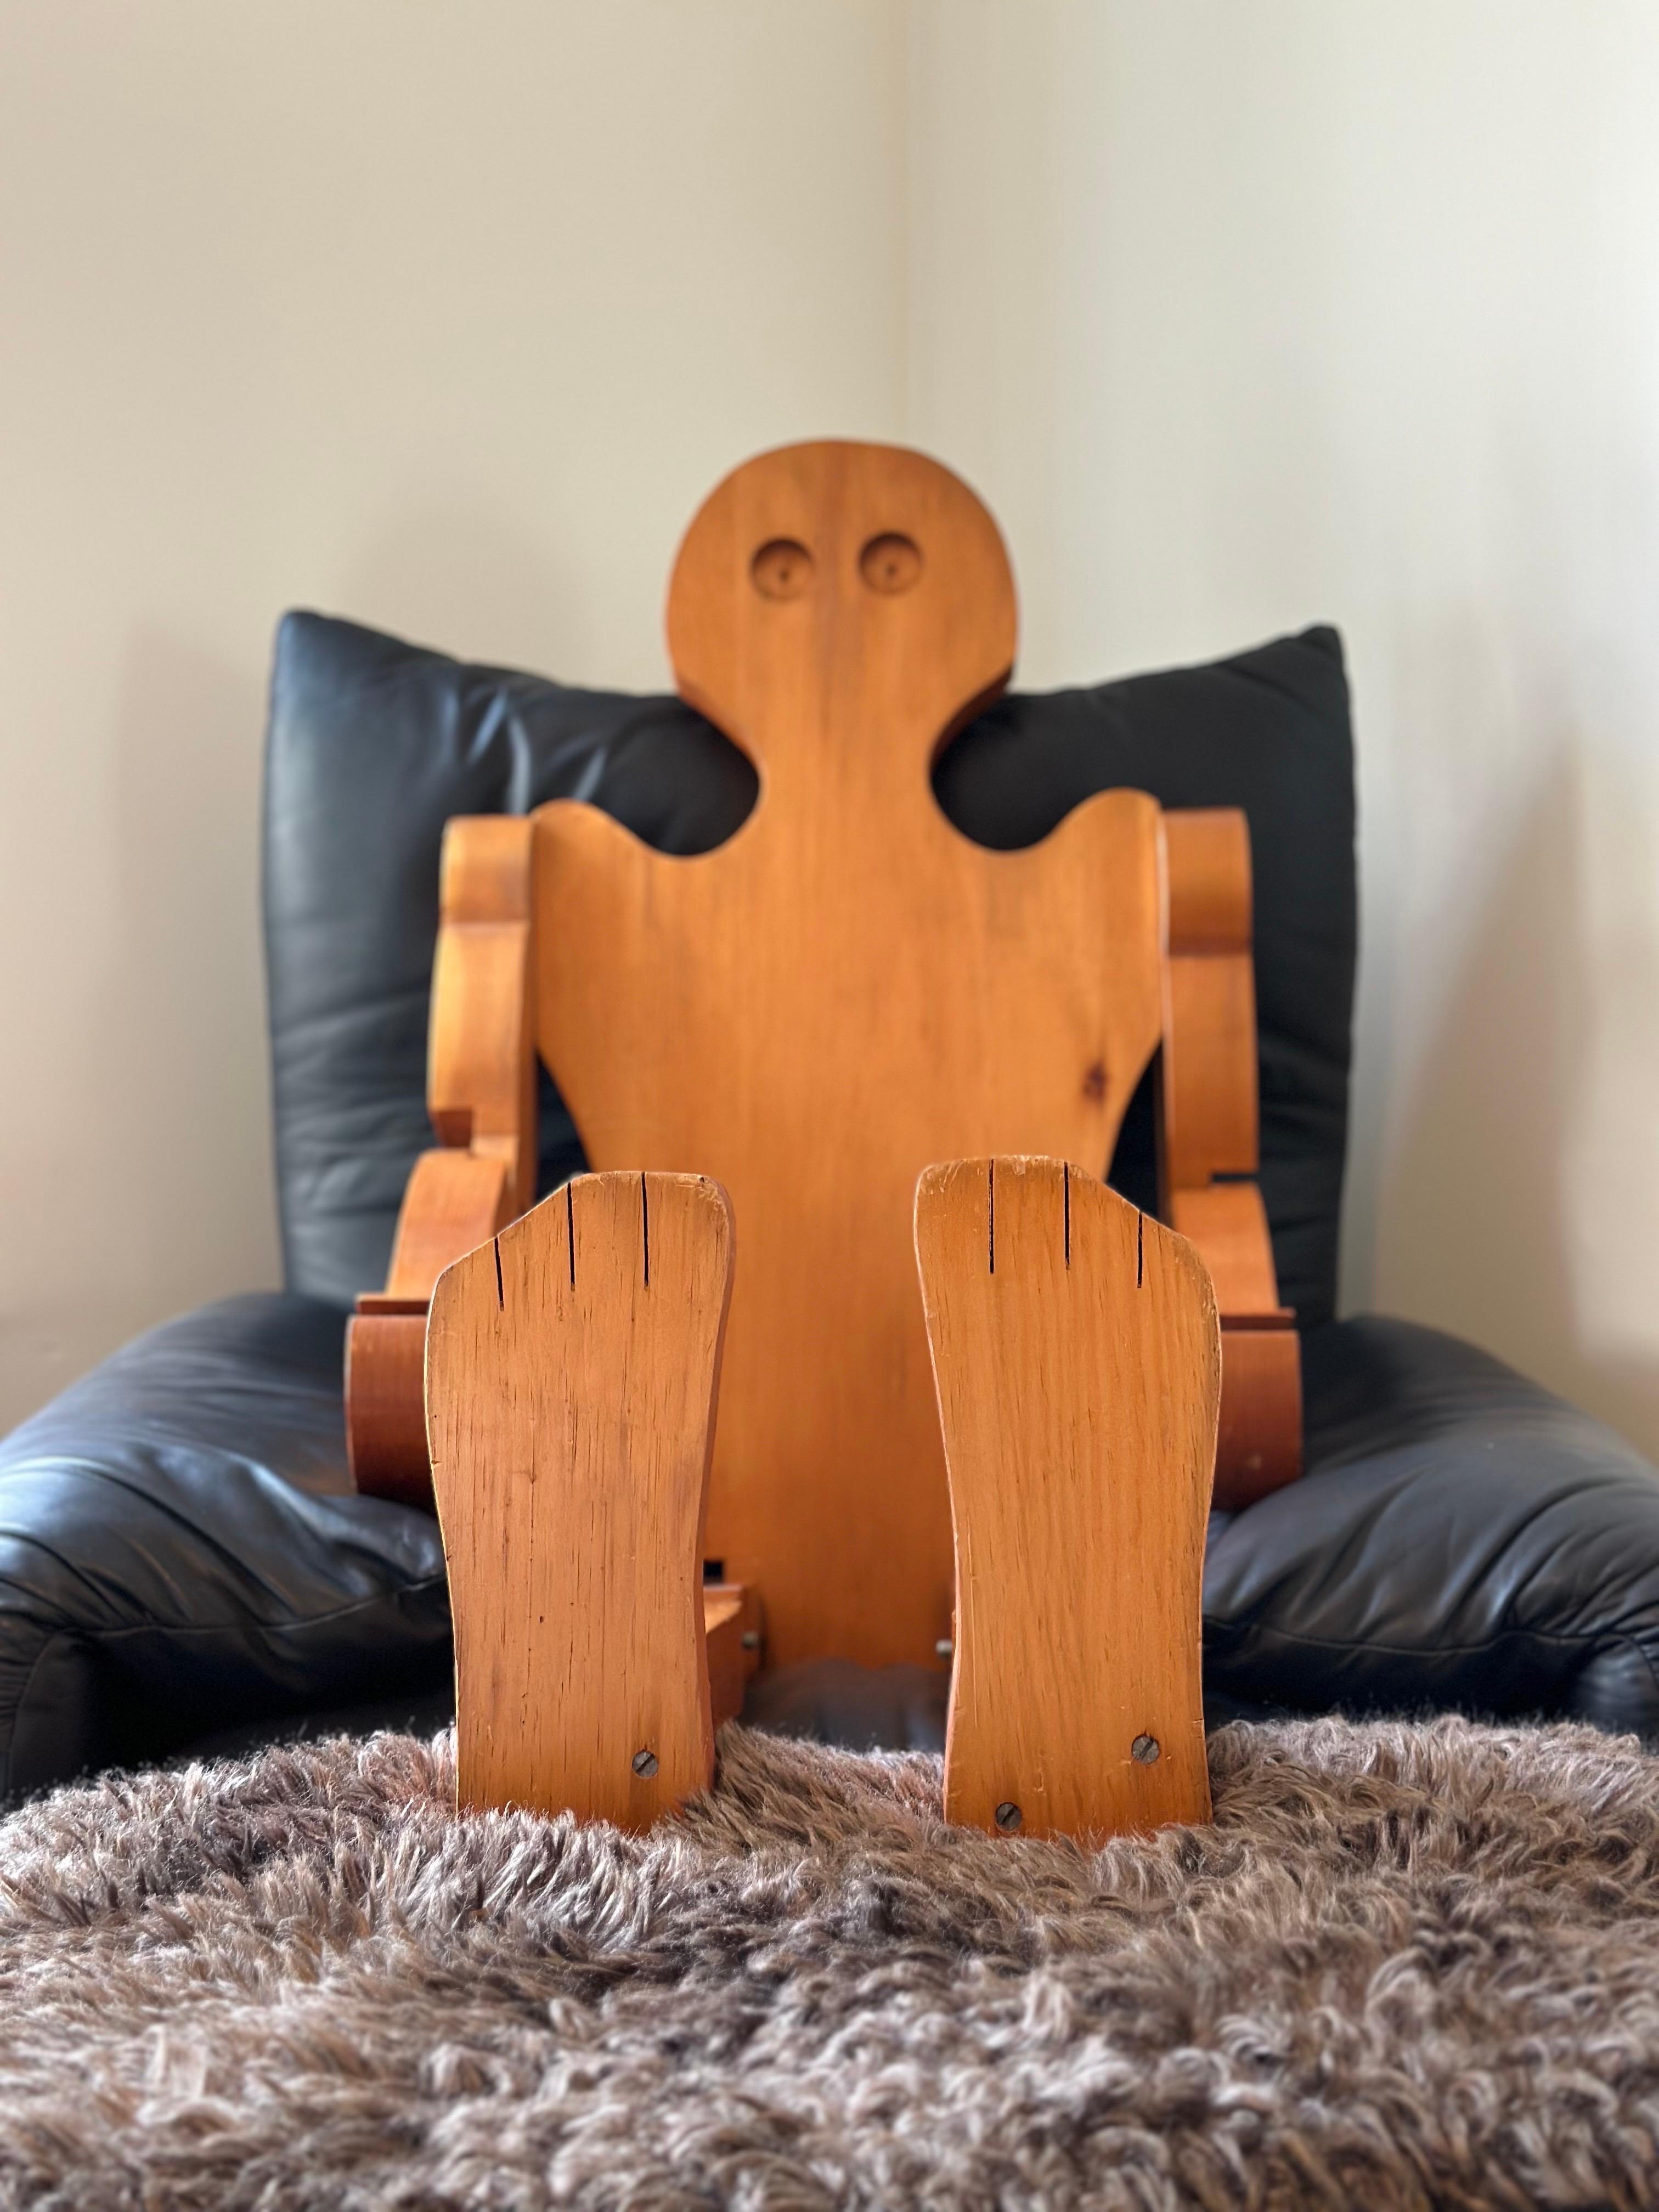 wooden man figure